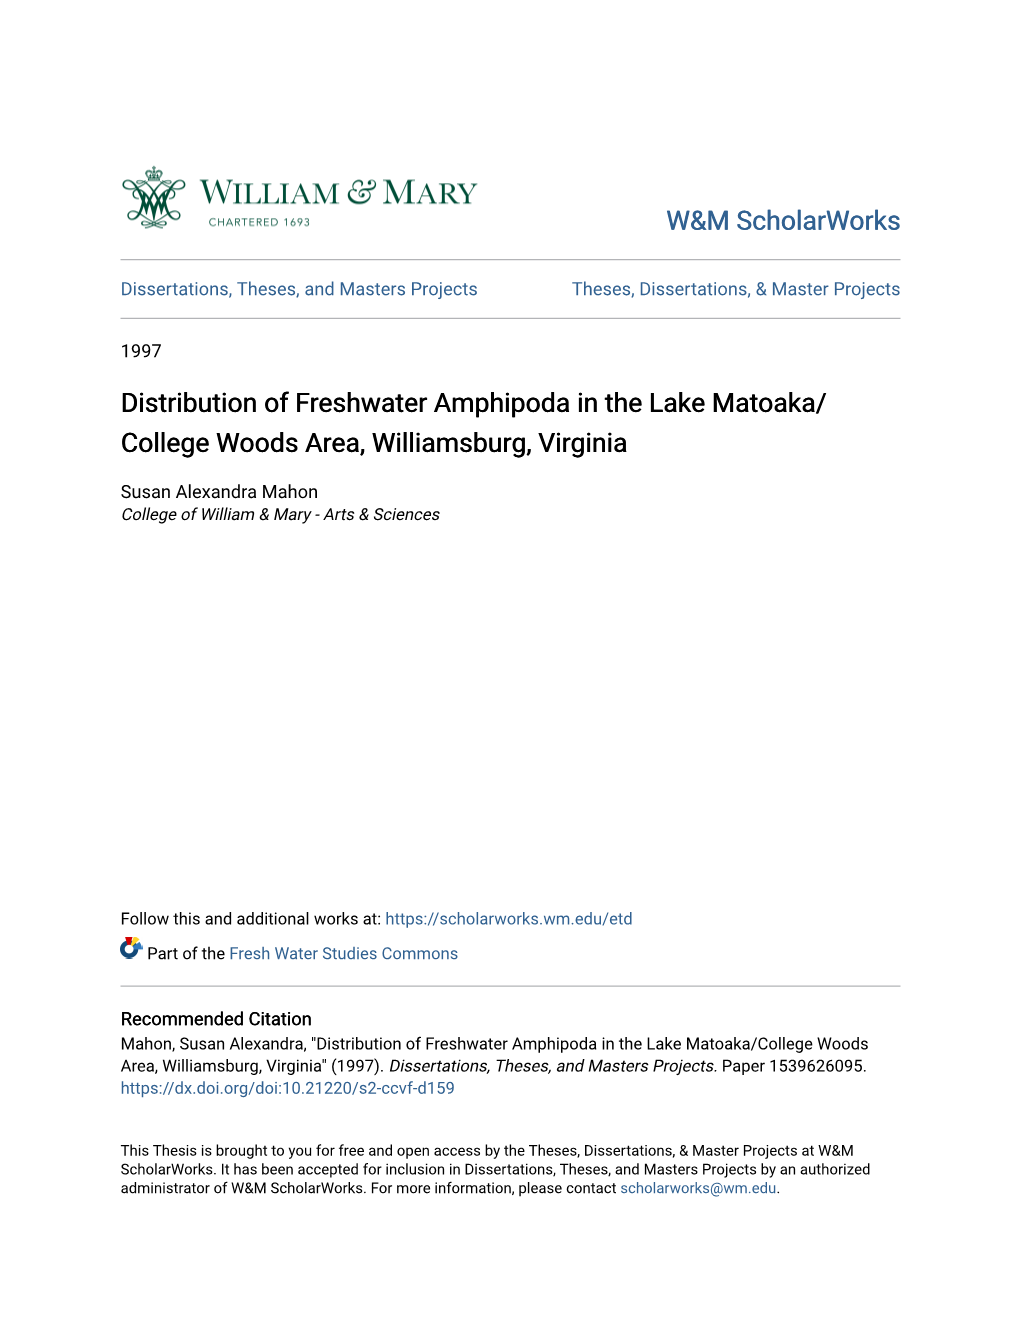 Distribution of Freshwater Amphipoda in the Lake Matoaka/College Woods Area, Williamsburg, Virginia" (1997)